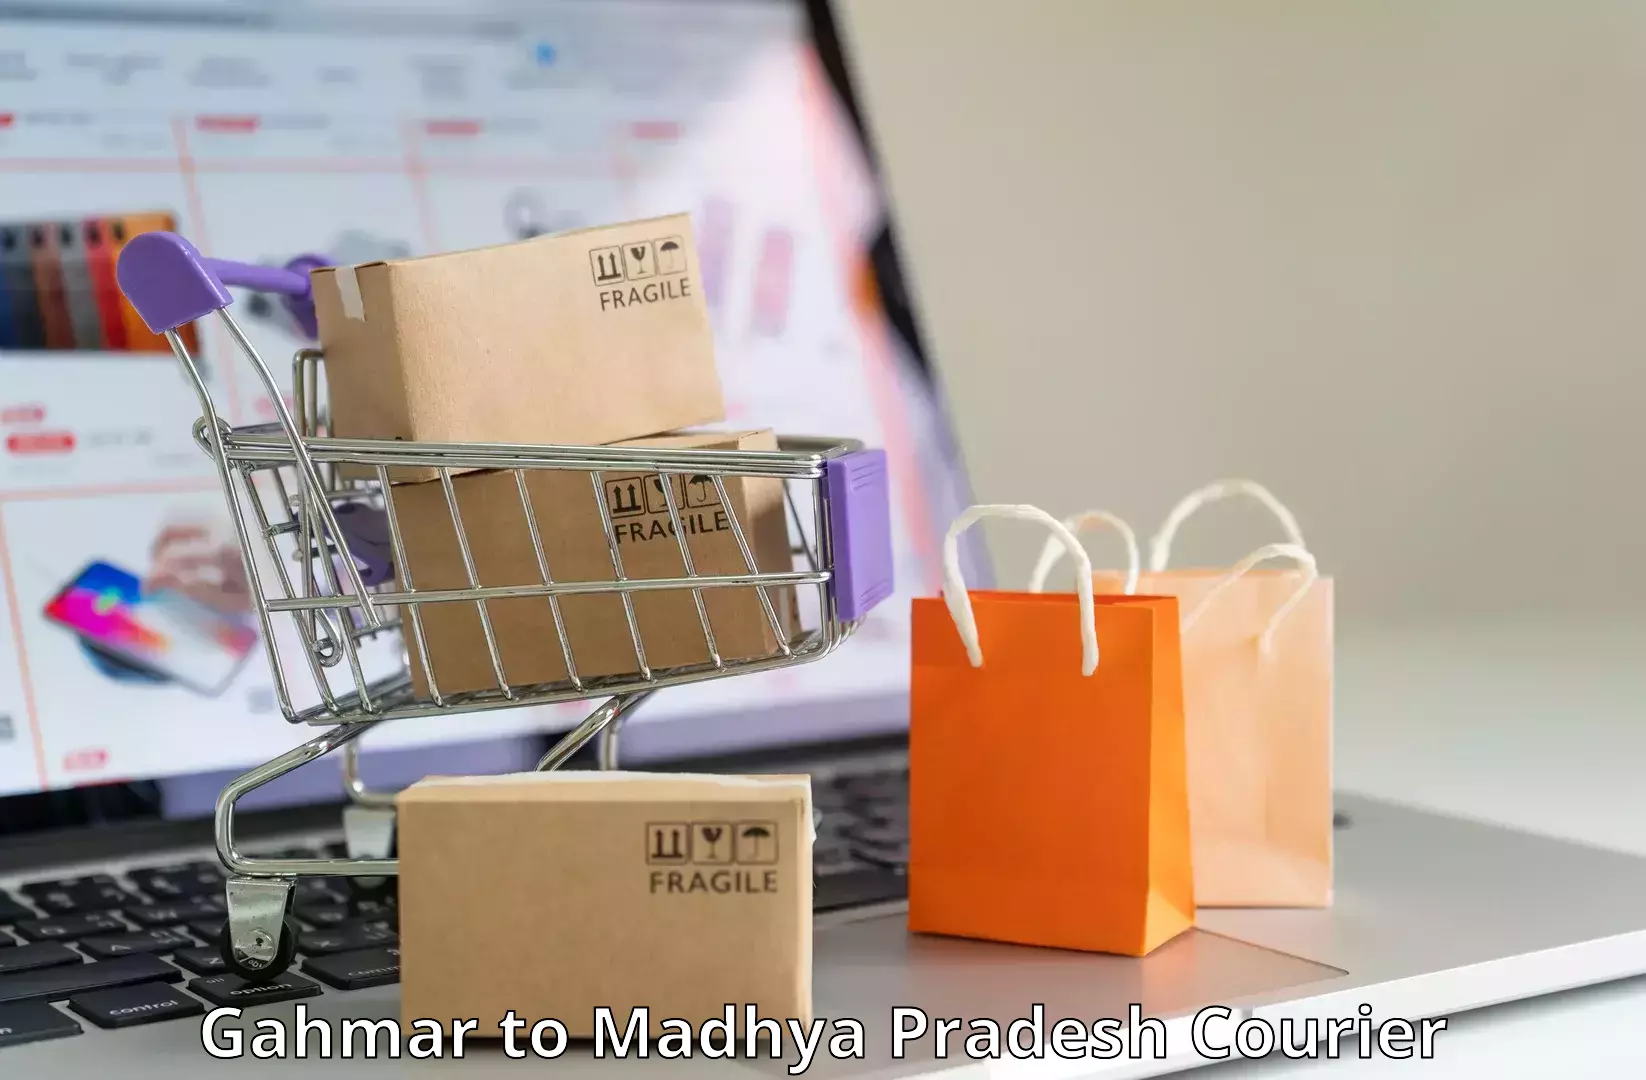 Premium courier solutions Gahmar to Maheshwar